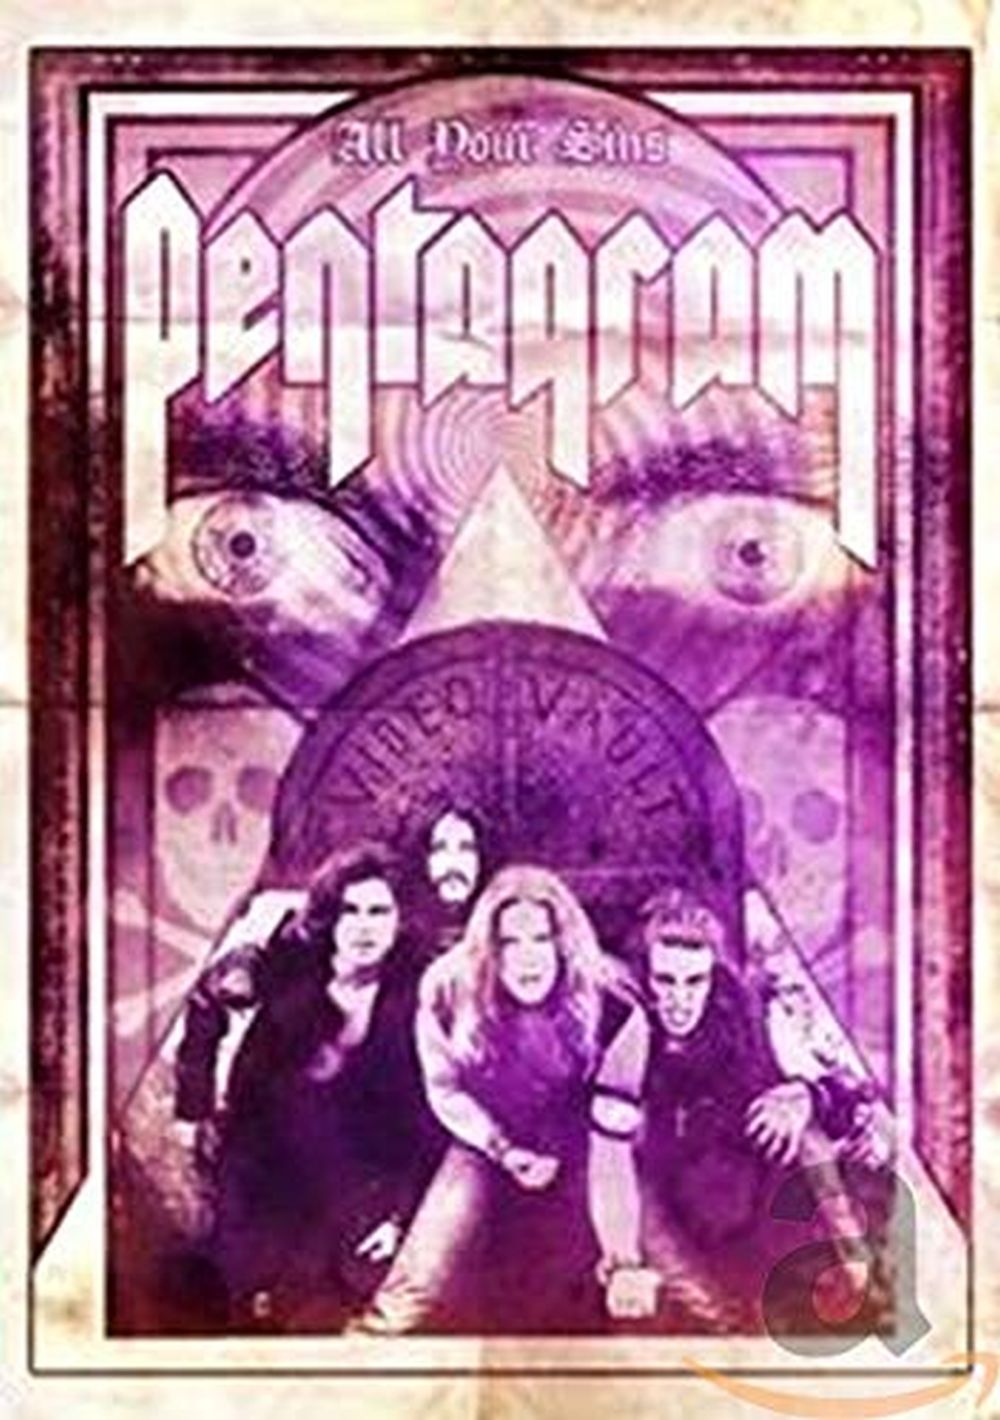 Pentagram - All Your Sins (2DVD) (R0) - DVD - Music